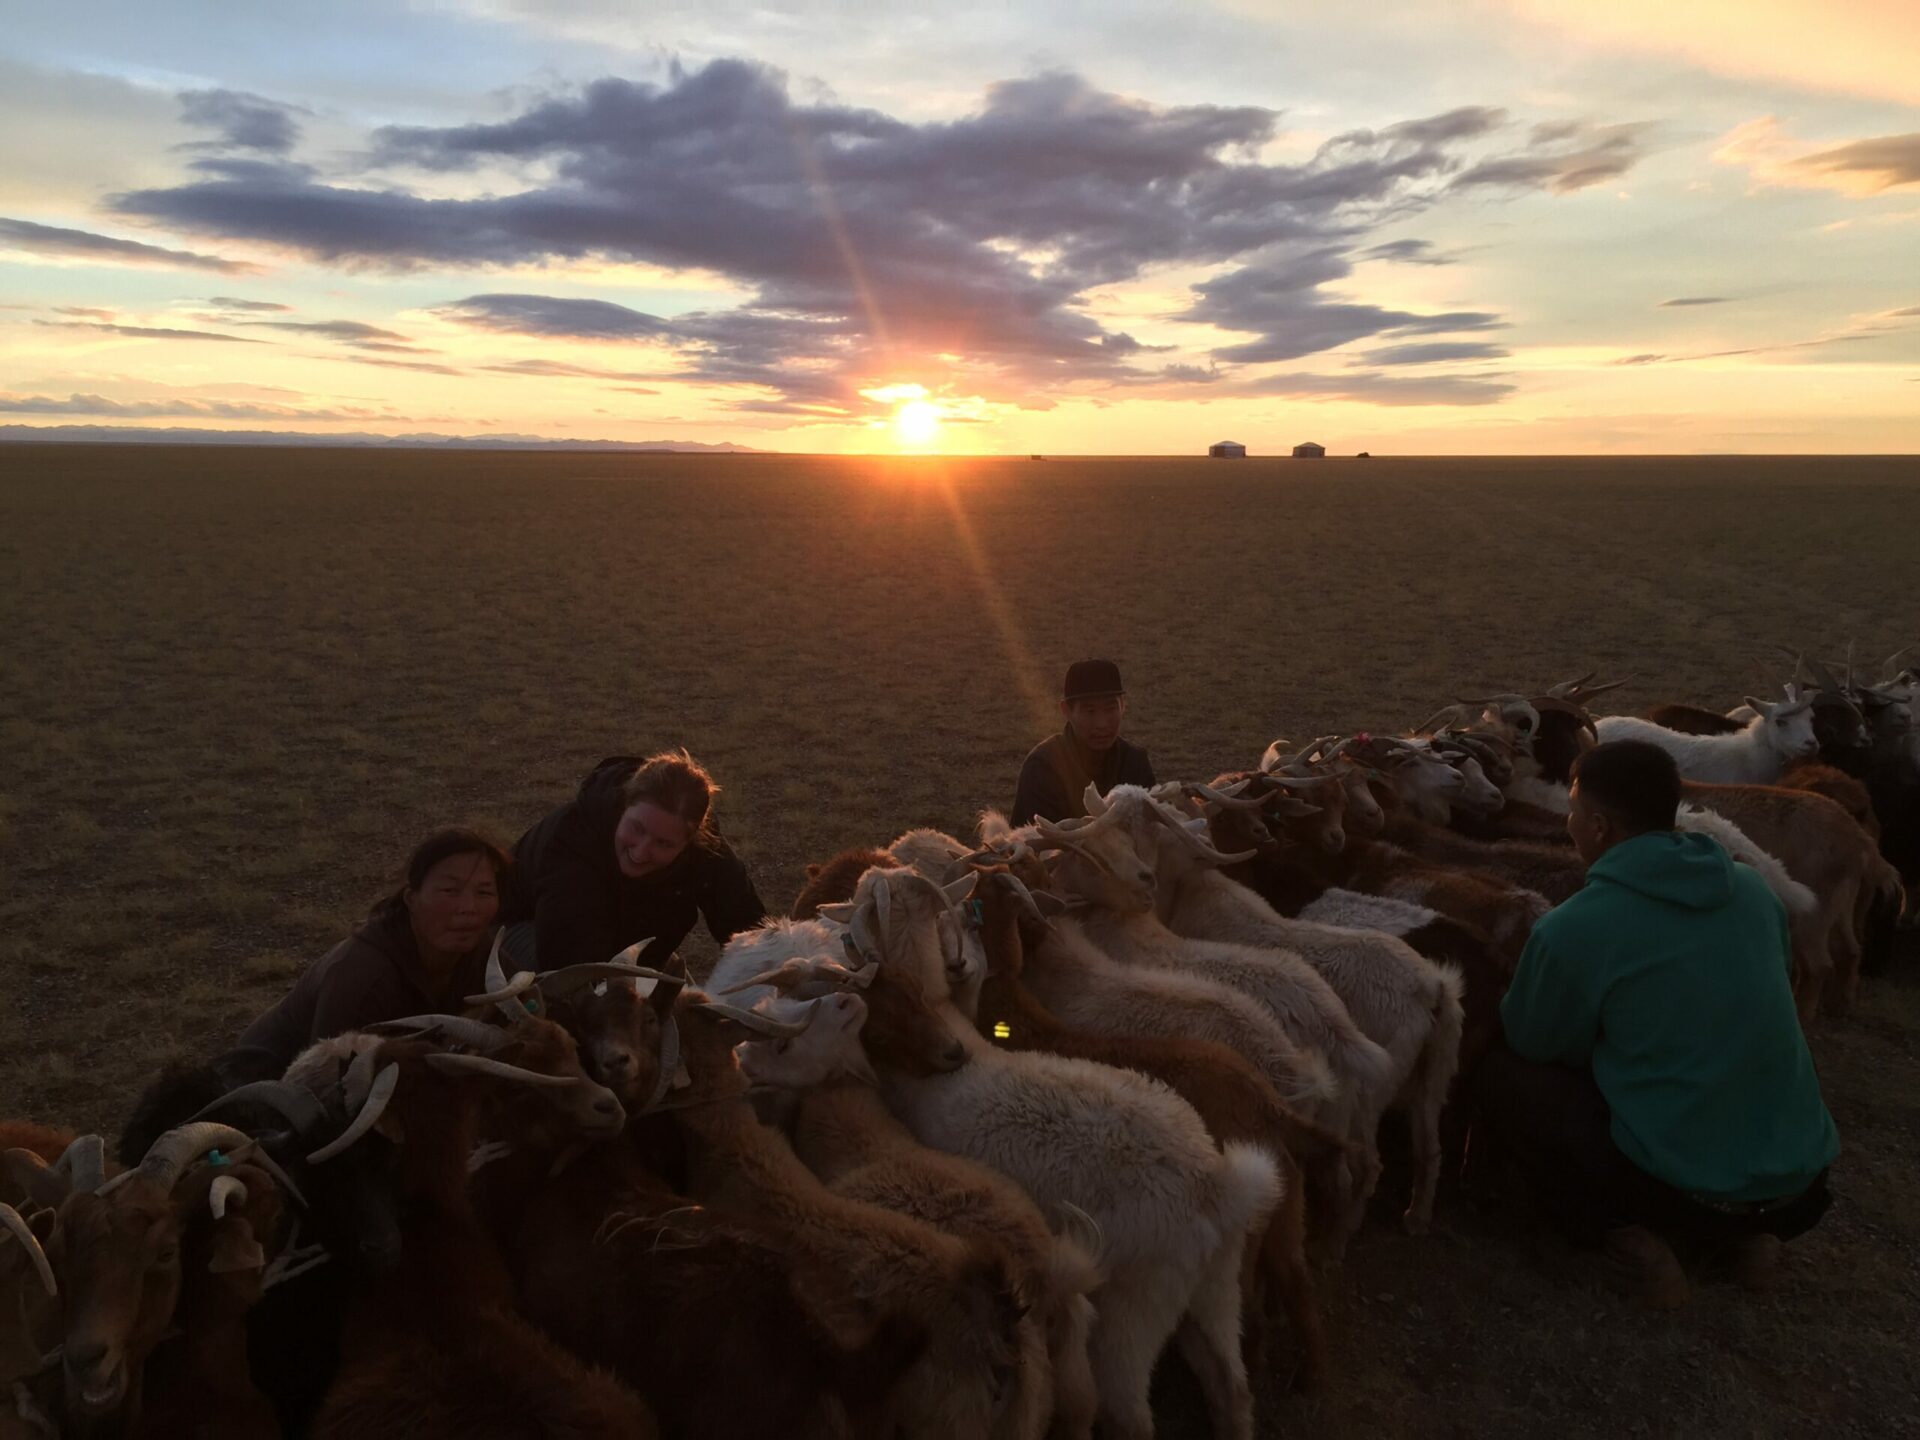 temoignage voyage mongolie podcast frenchies autour du monde